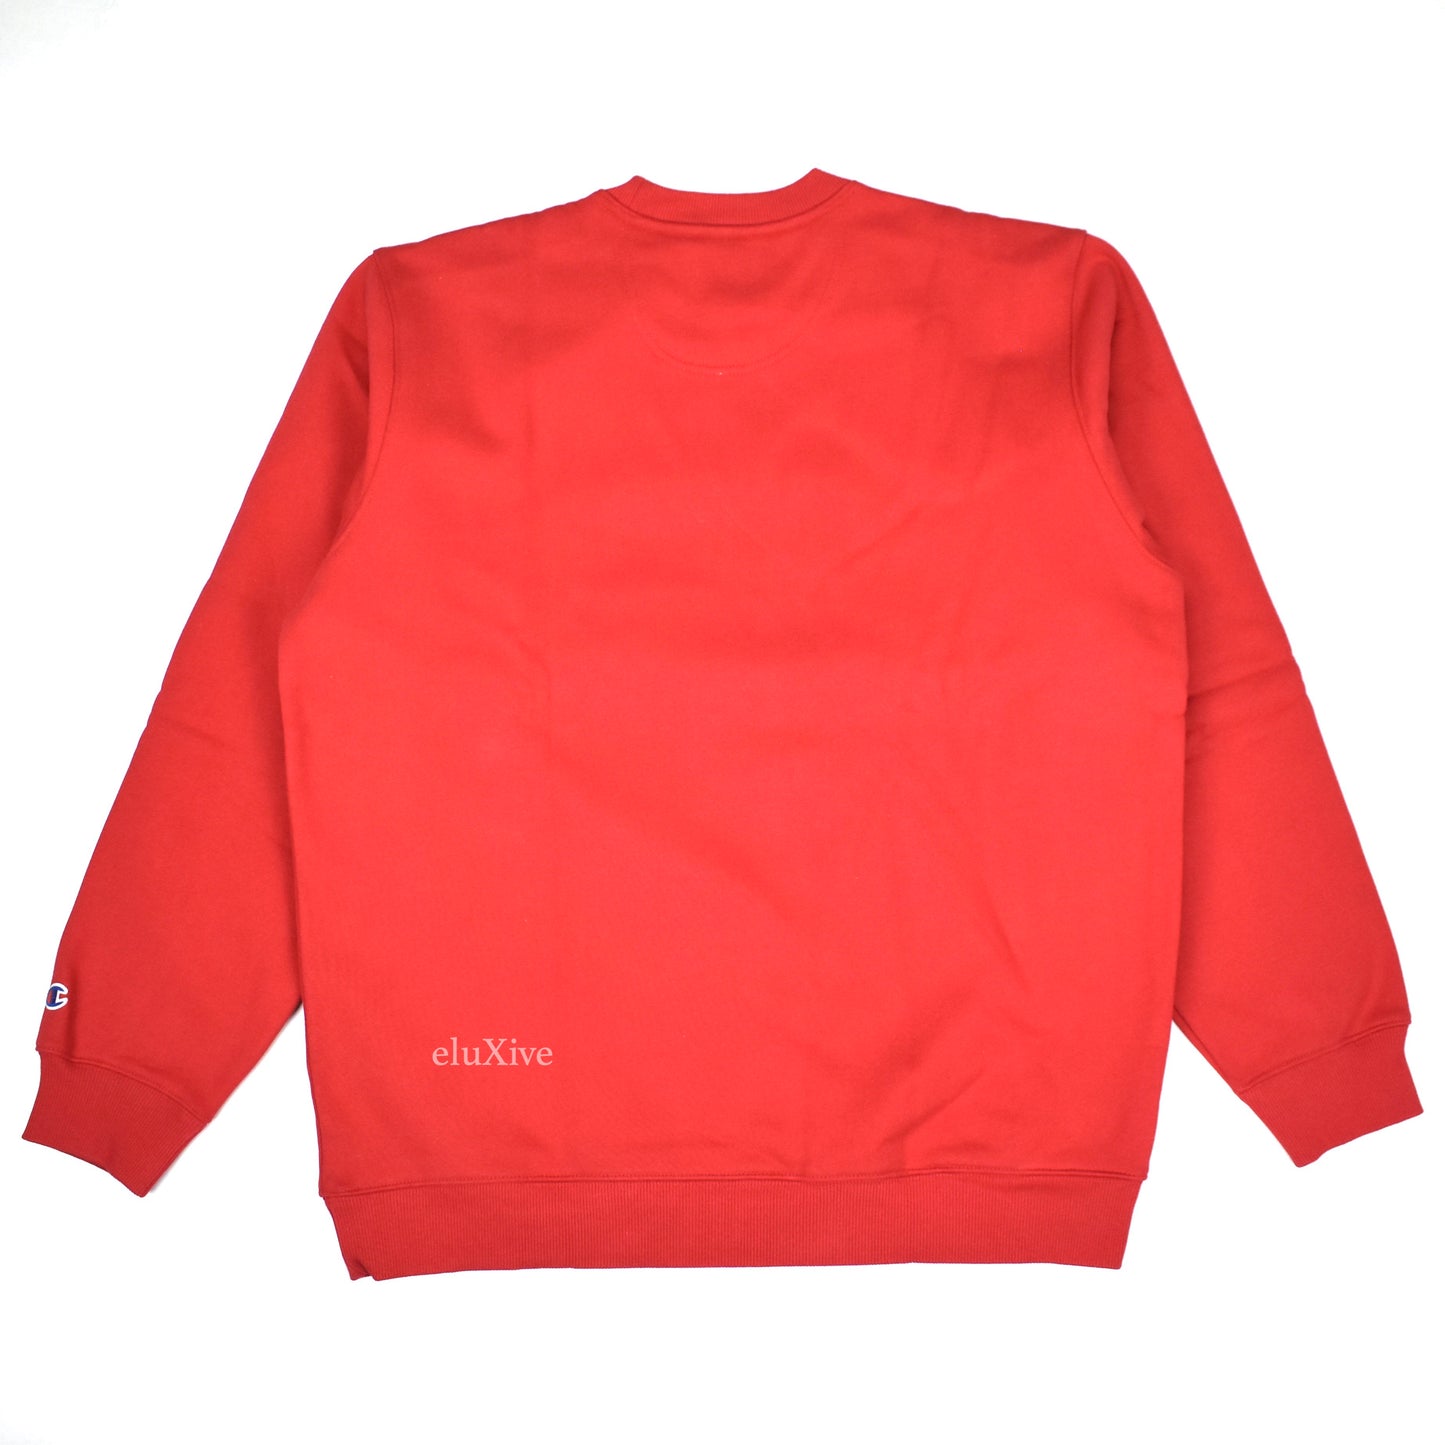 Supreme x Champion - Red 'Stay in School' Logo Sweatshirt